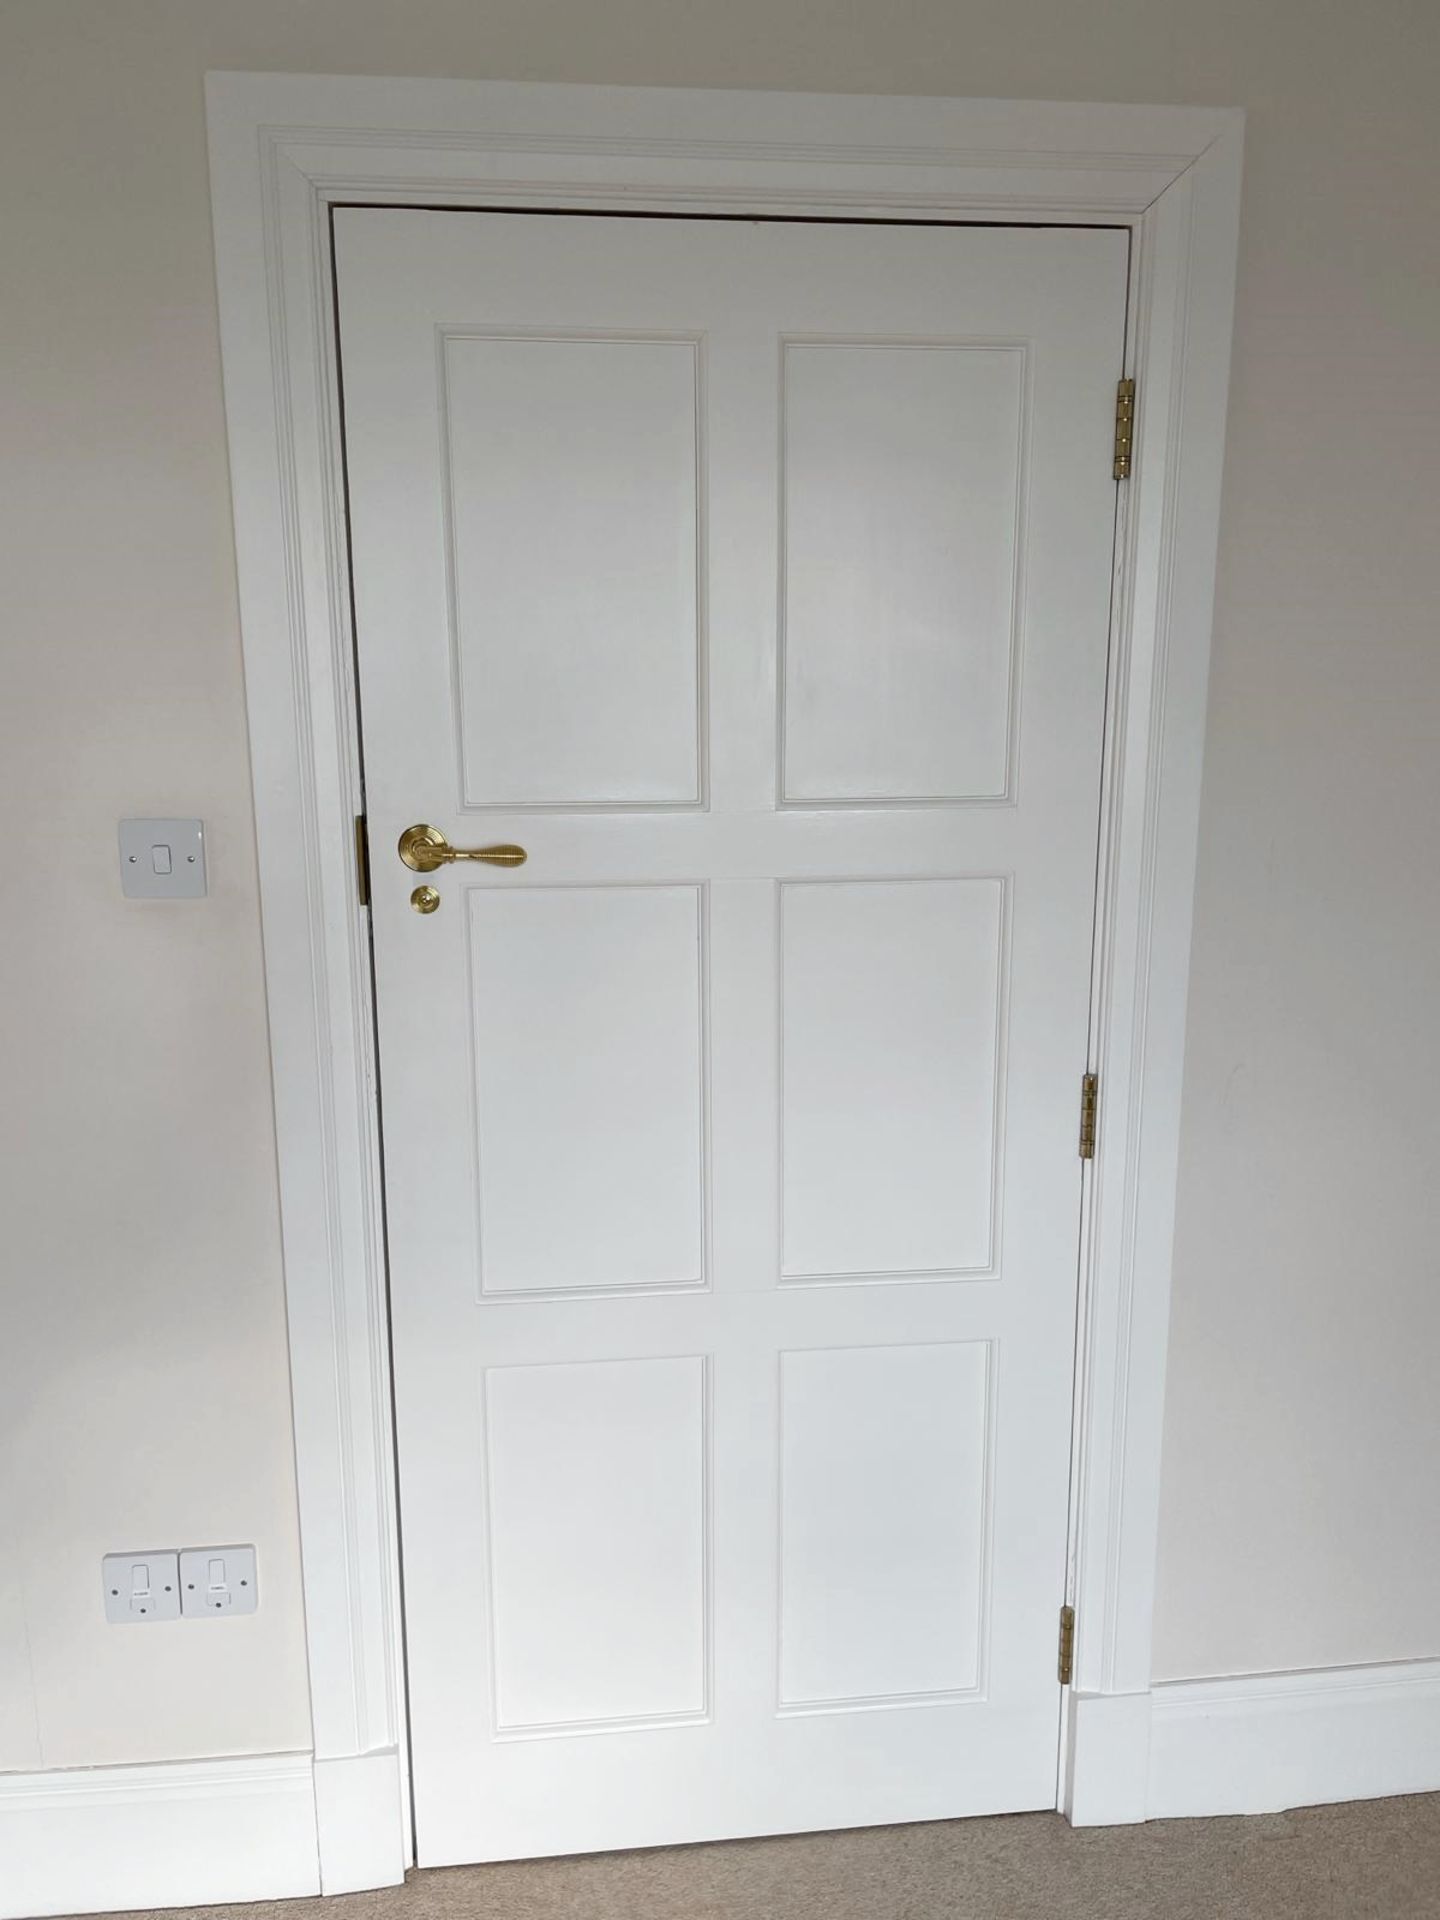 1 x Solid Wood Lockable Painted Internal Door in White - Image 4 of 11